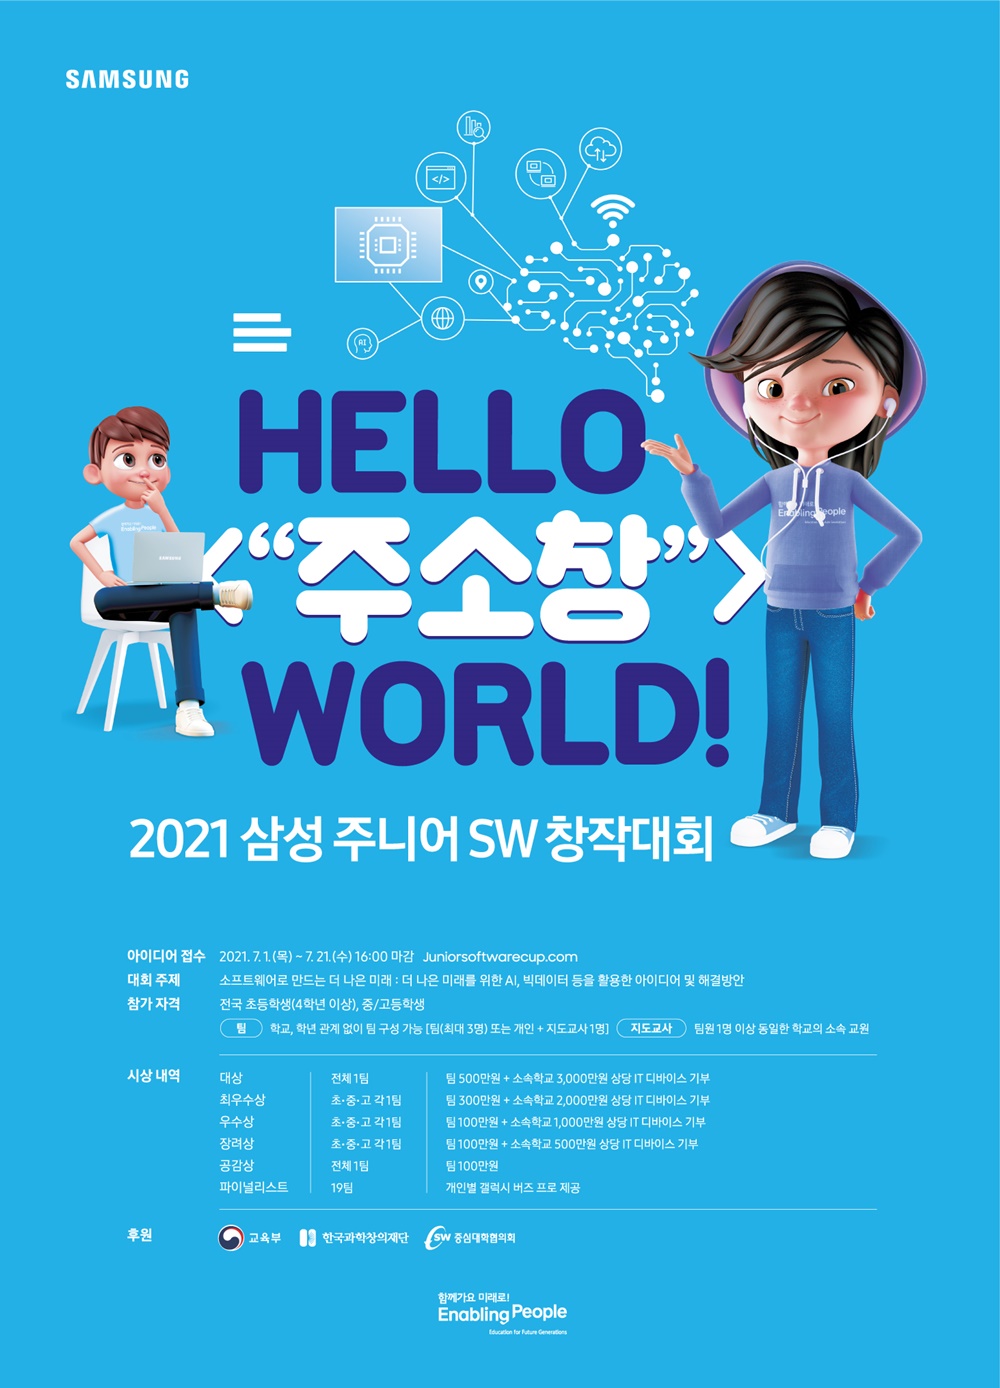 samsung hello "주소창" world! 2021 삼성 주니어 sw 창작대회